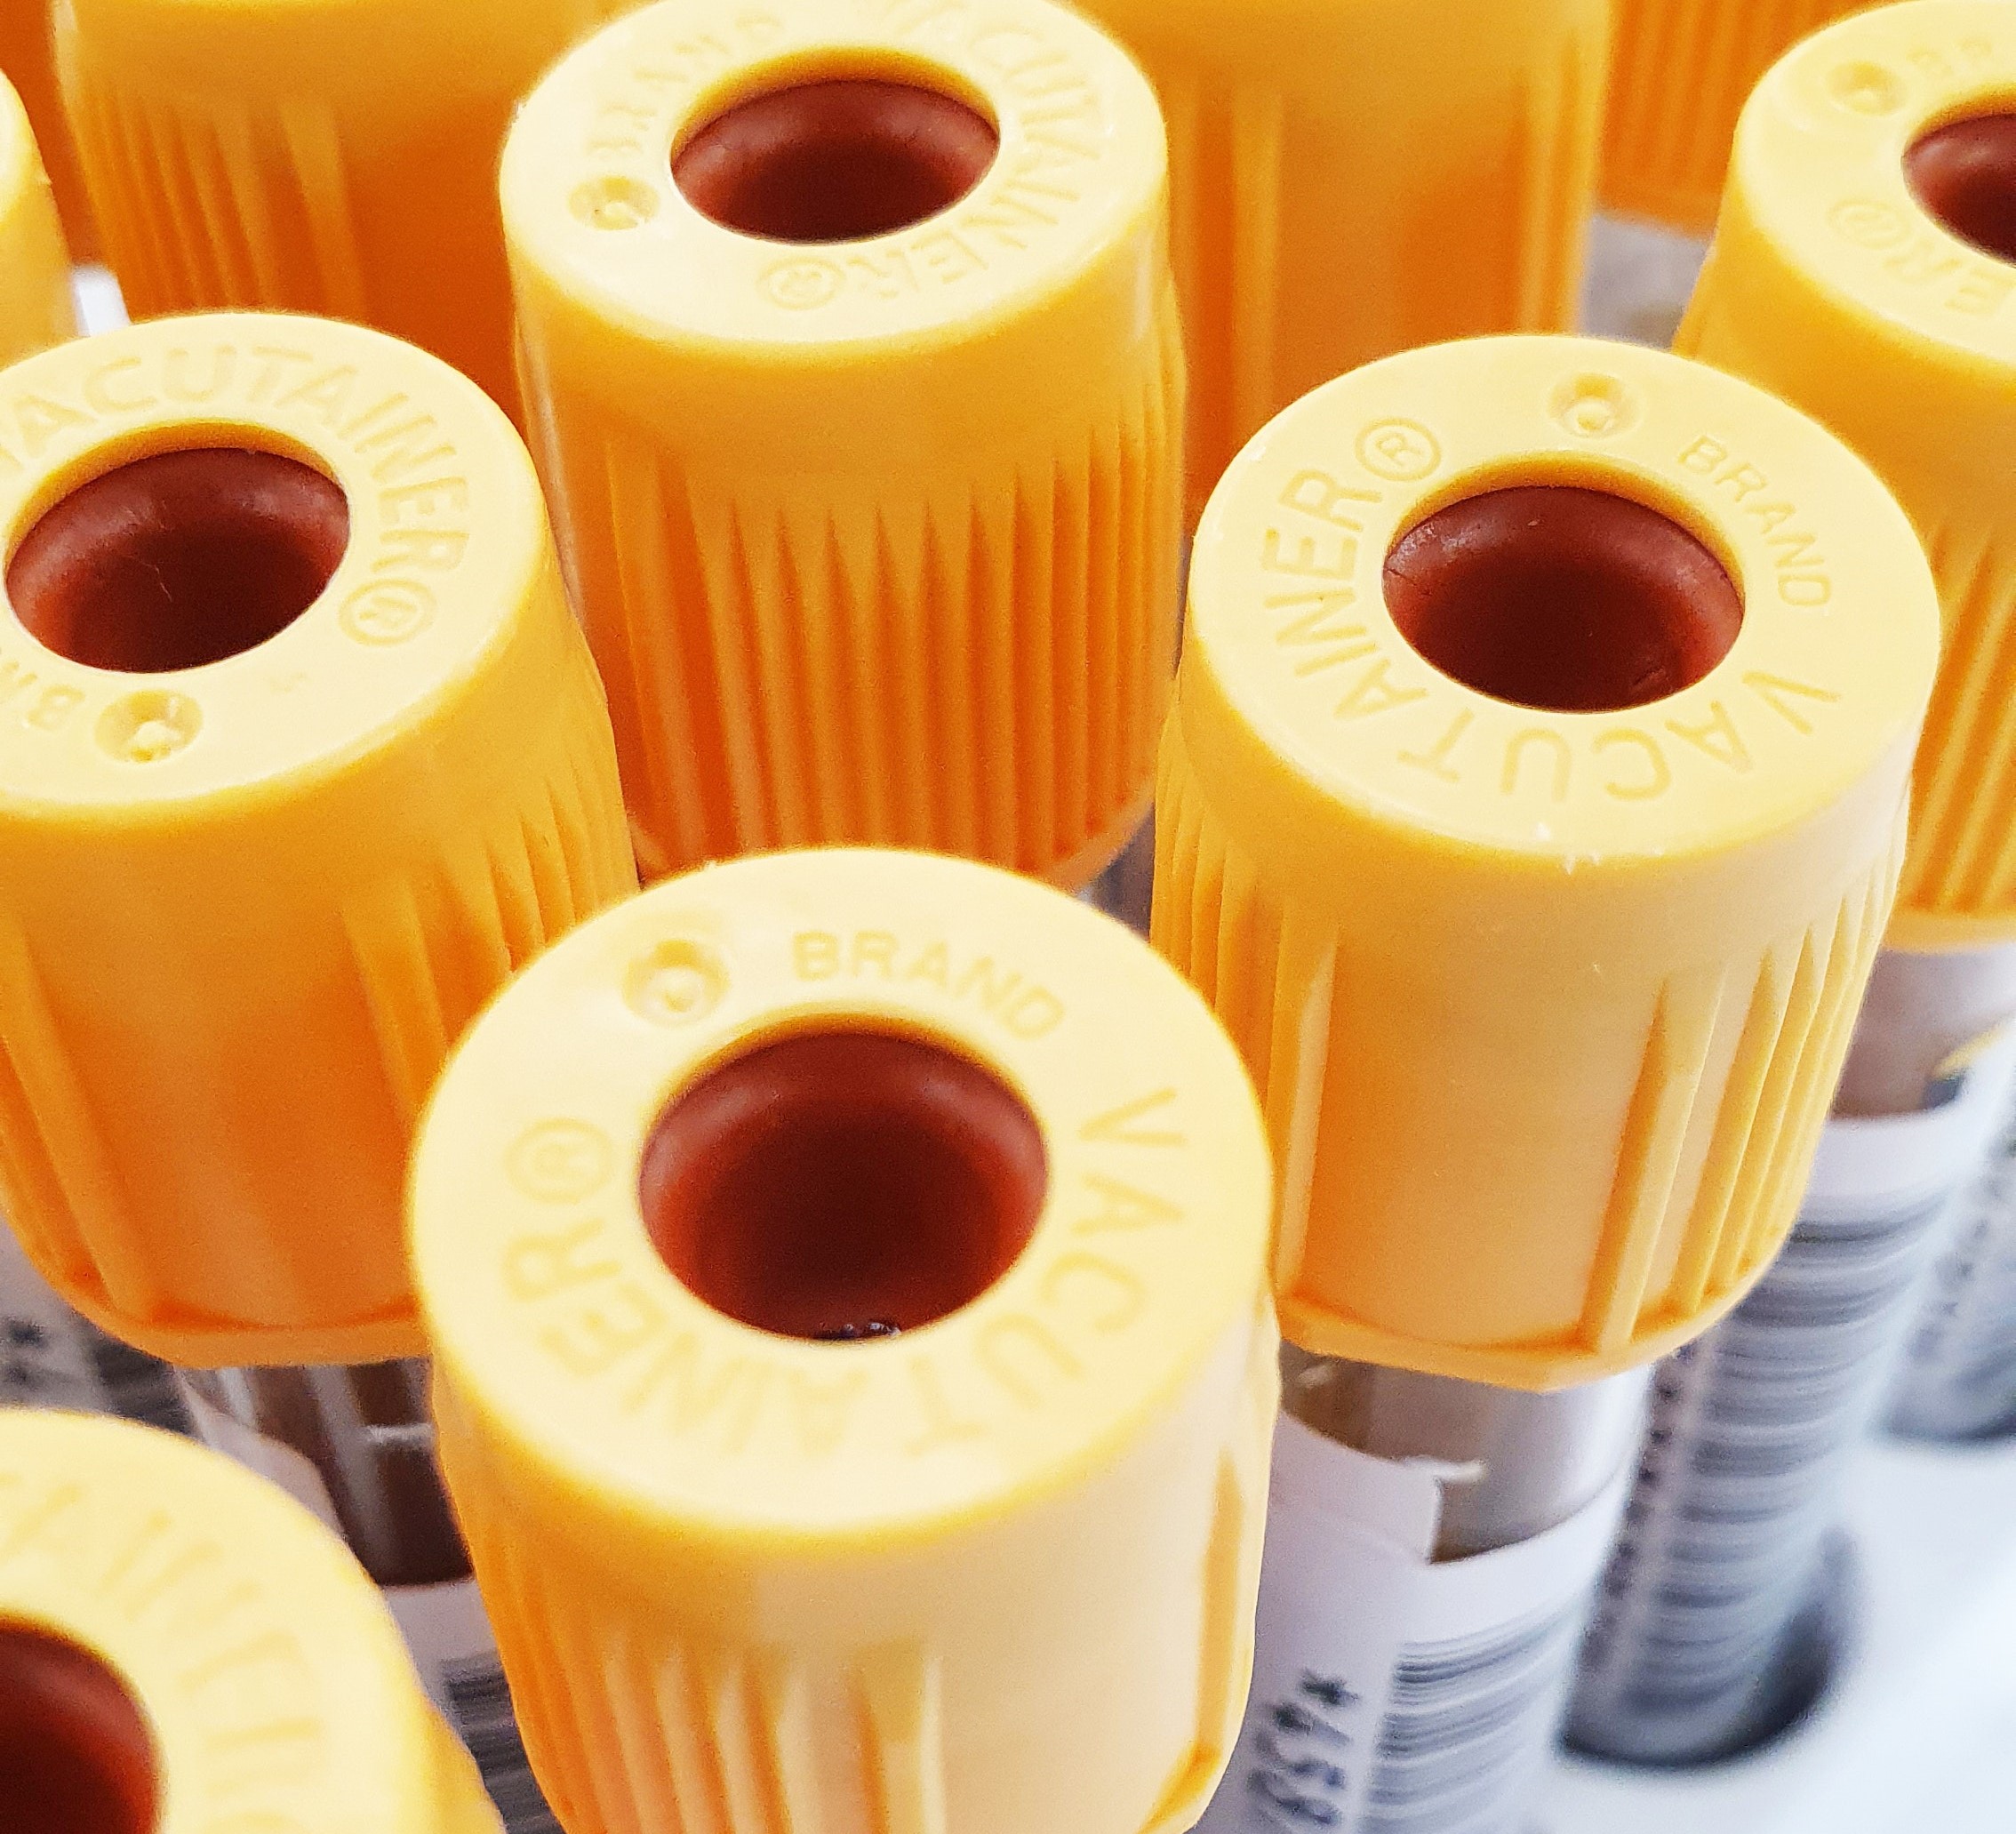 Yellow topped blood testing tubes